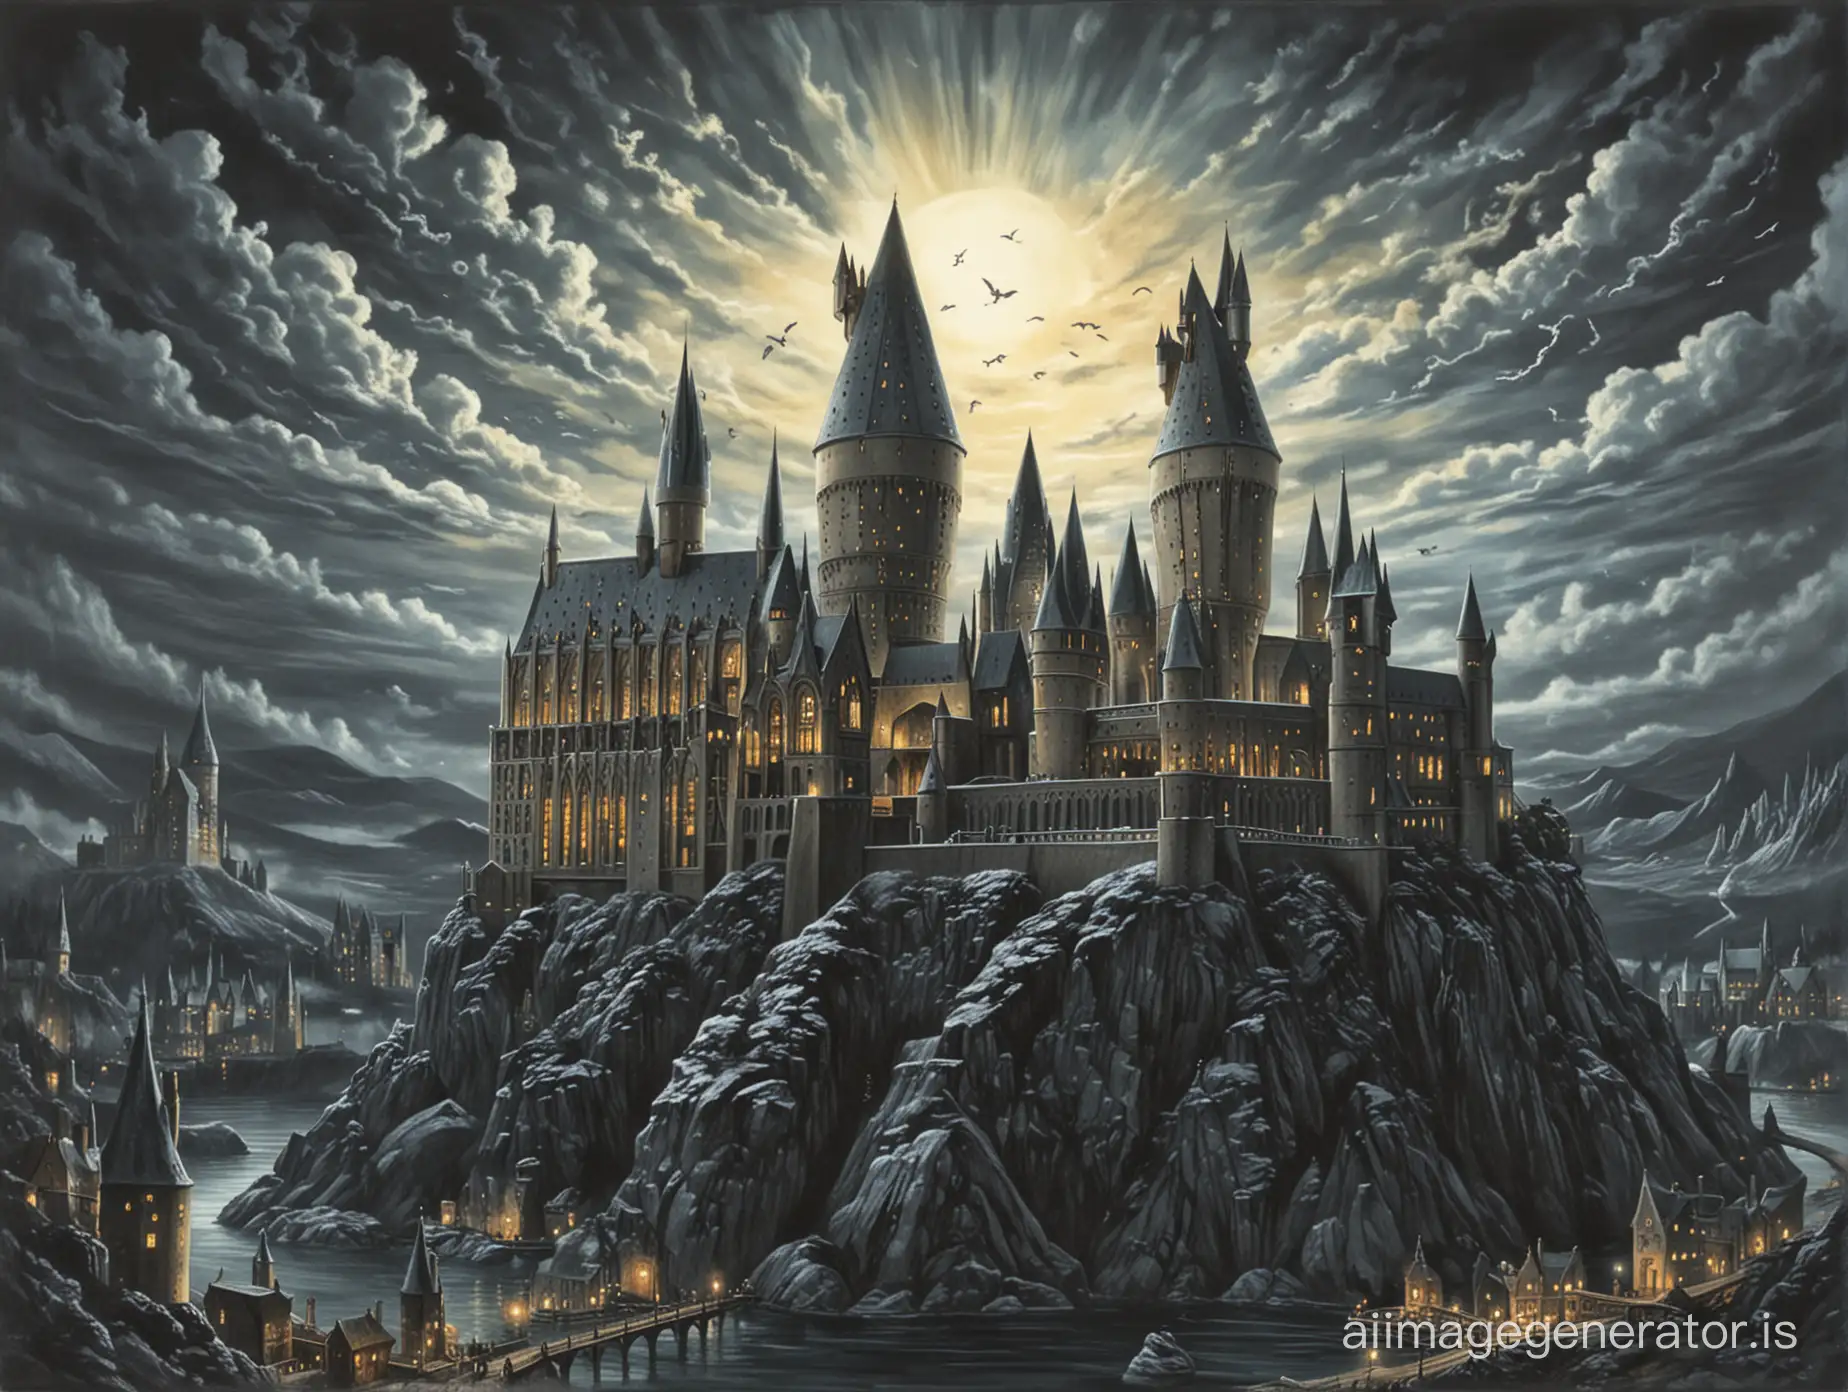 Majestic-Hogwarts-Castle-Illustration-from-Harry-Potter-Series